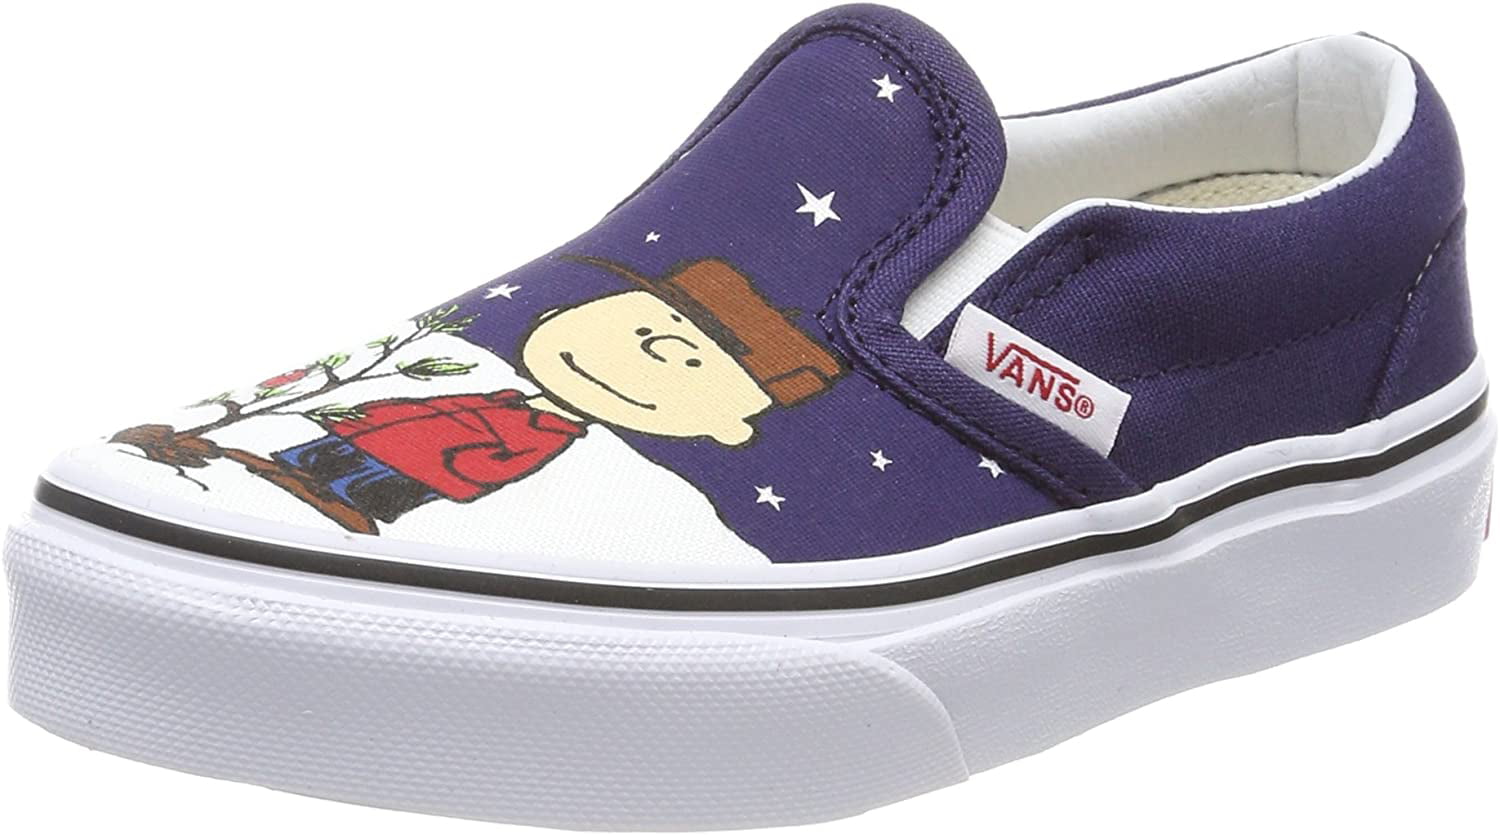 UK 1.5 UK 12.5 Van's Classic Slip On Peanuts Charlie/Tree Kids Shoes Pumps 